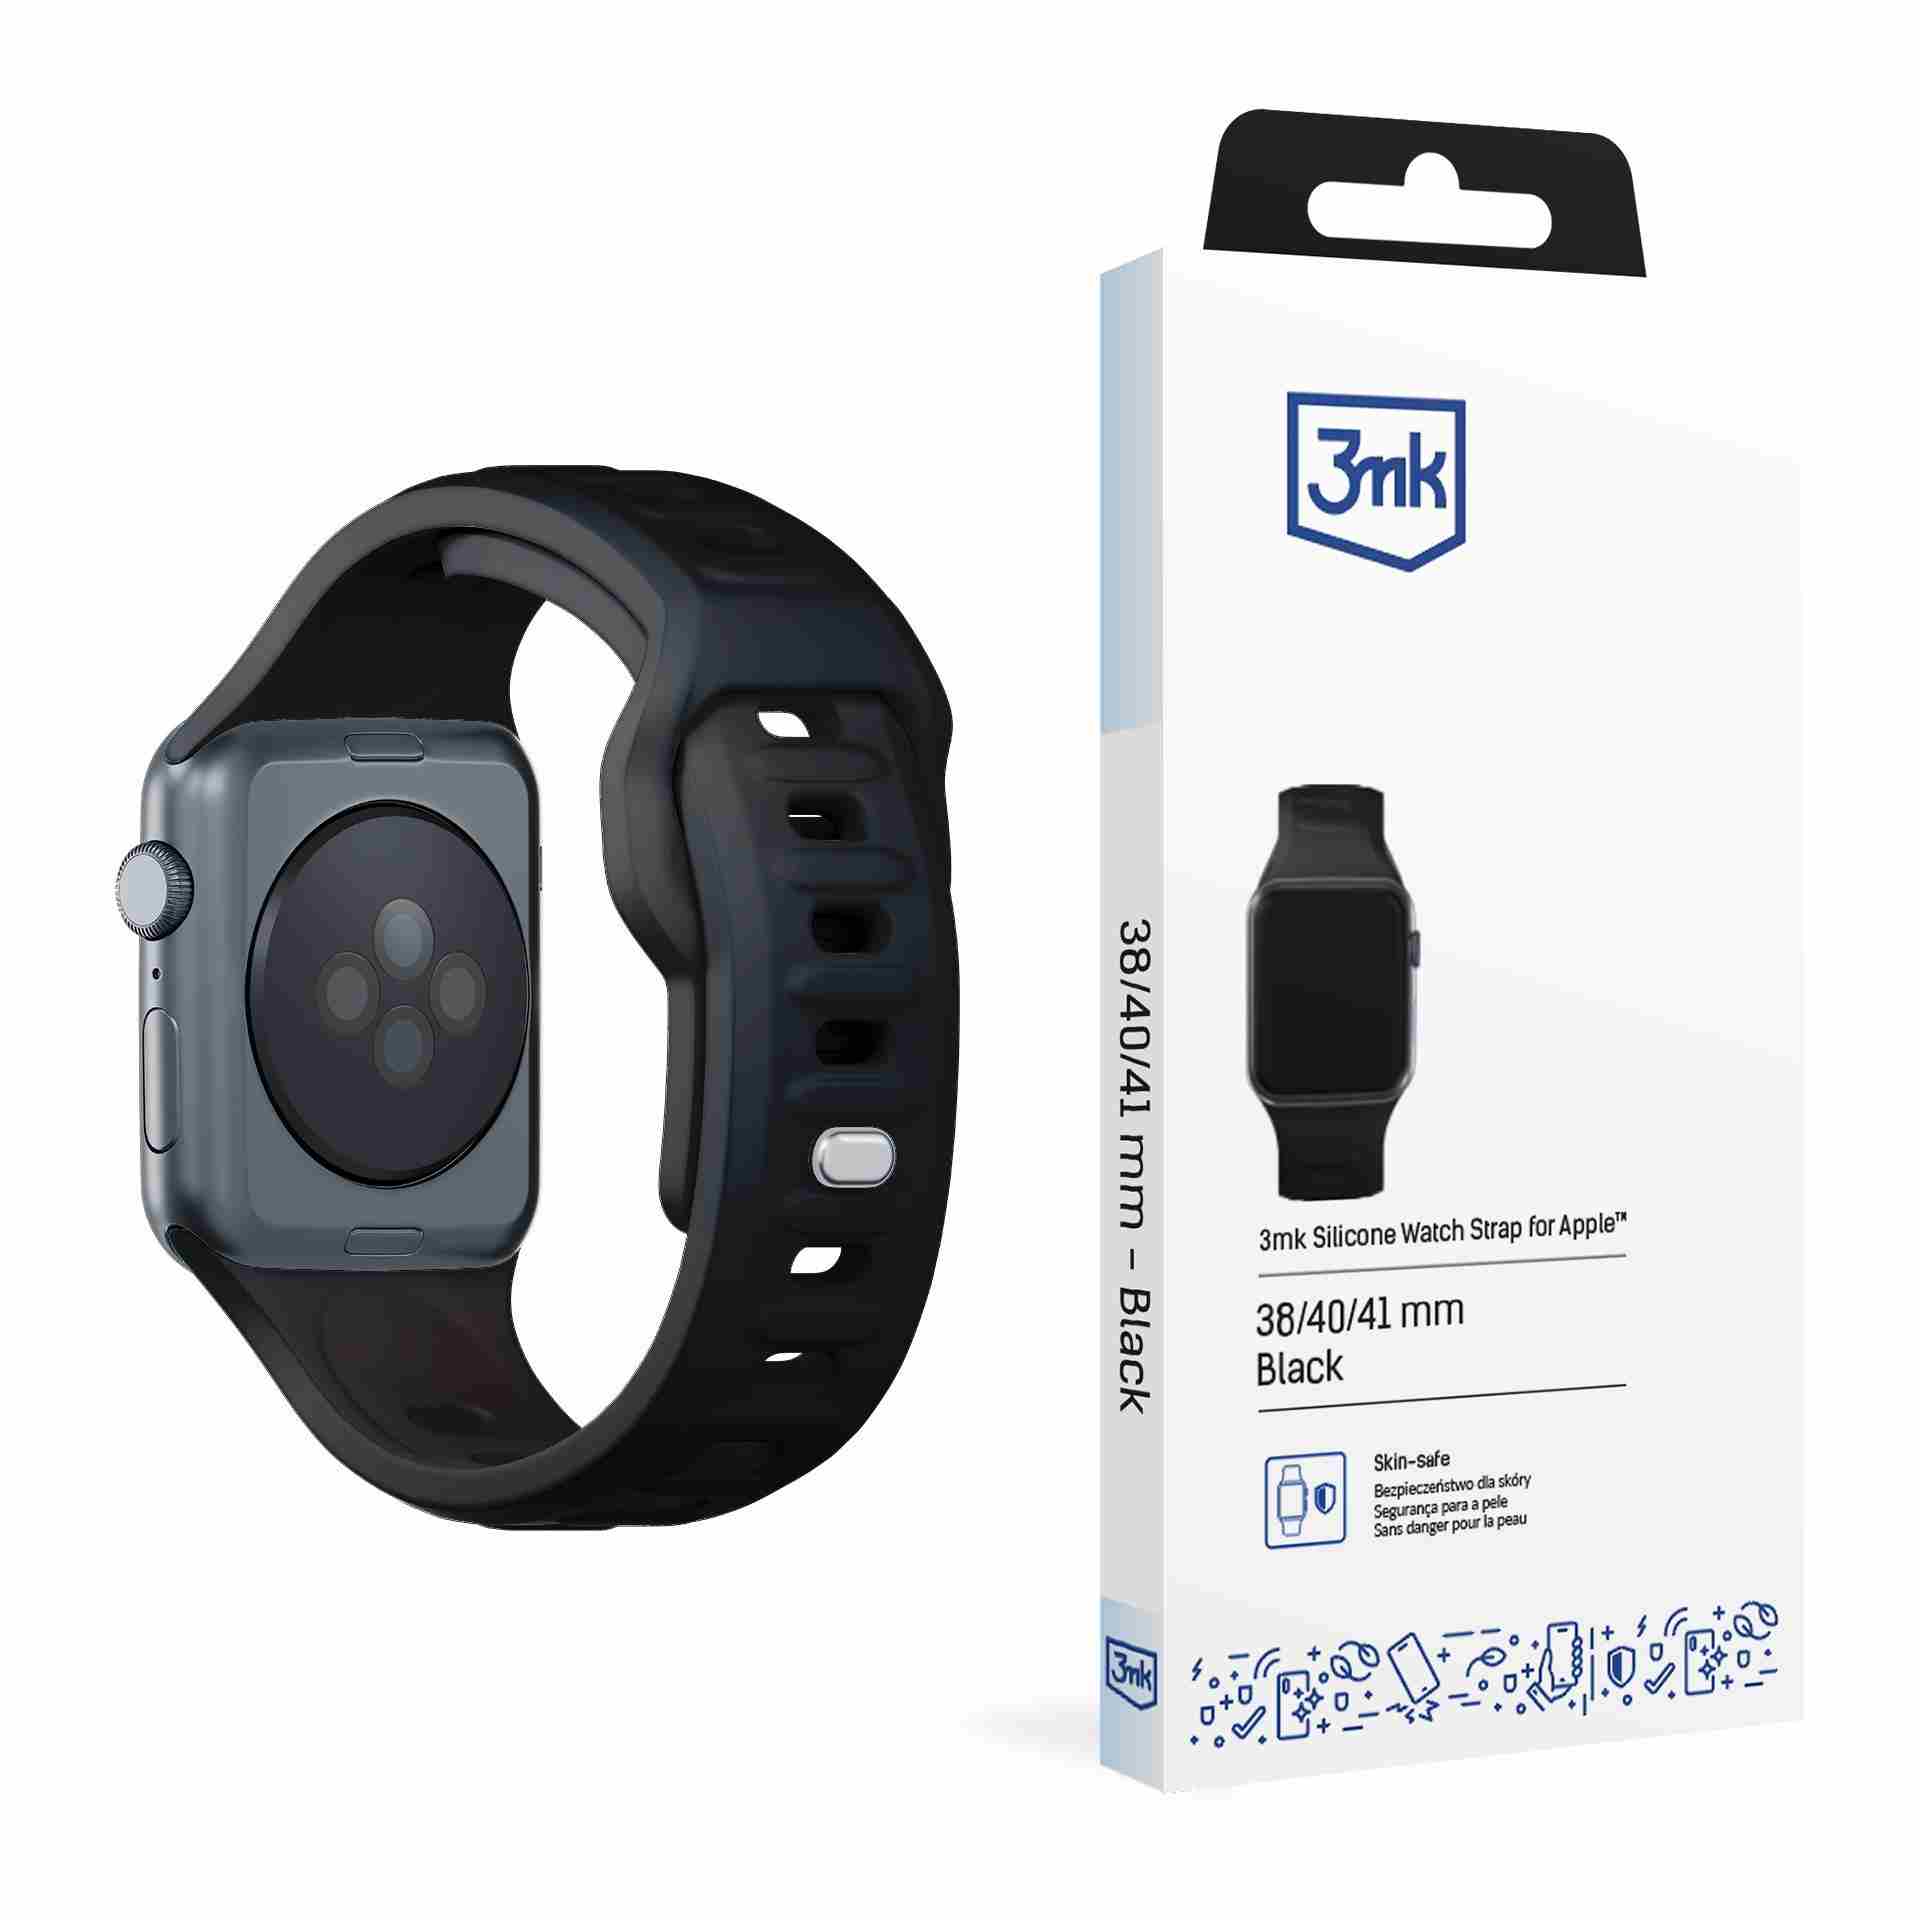 3mk Silicone Watch Strap pro Apple 38 40 41 mm Black0 